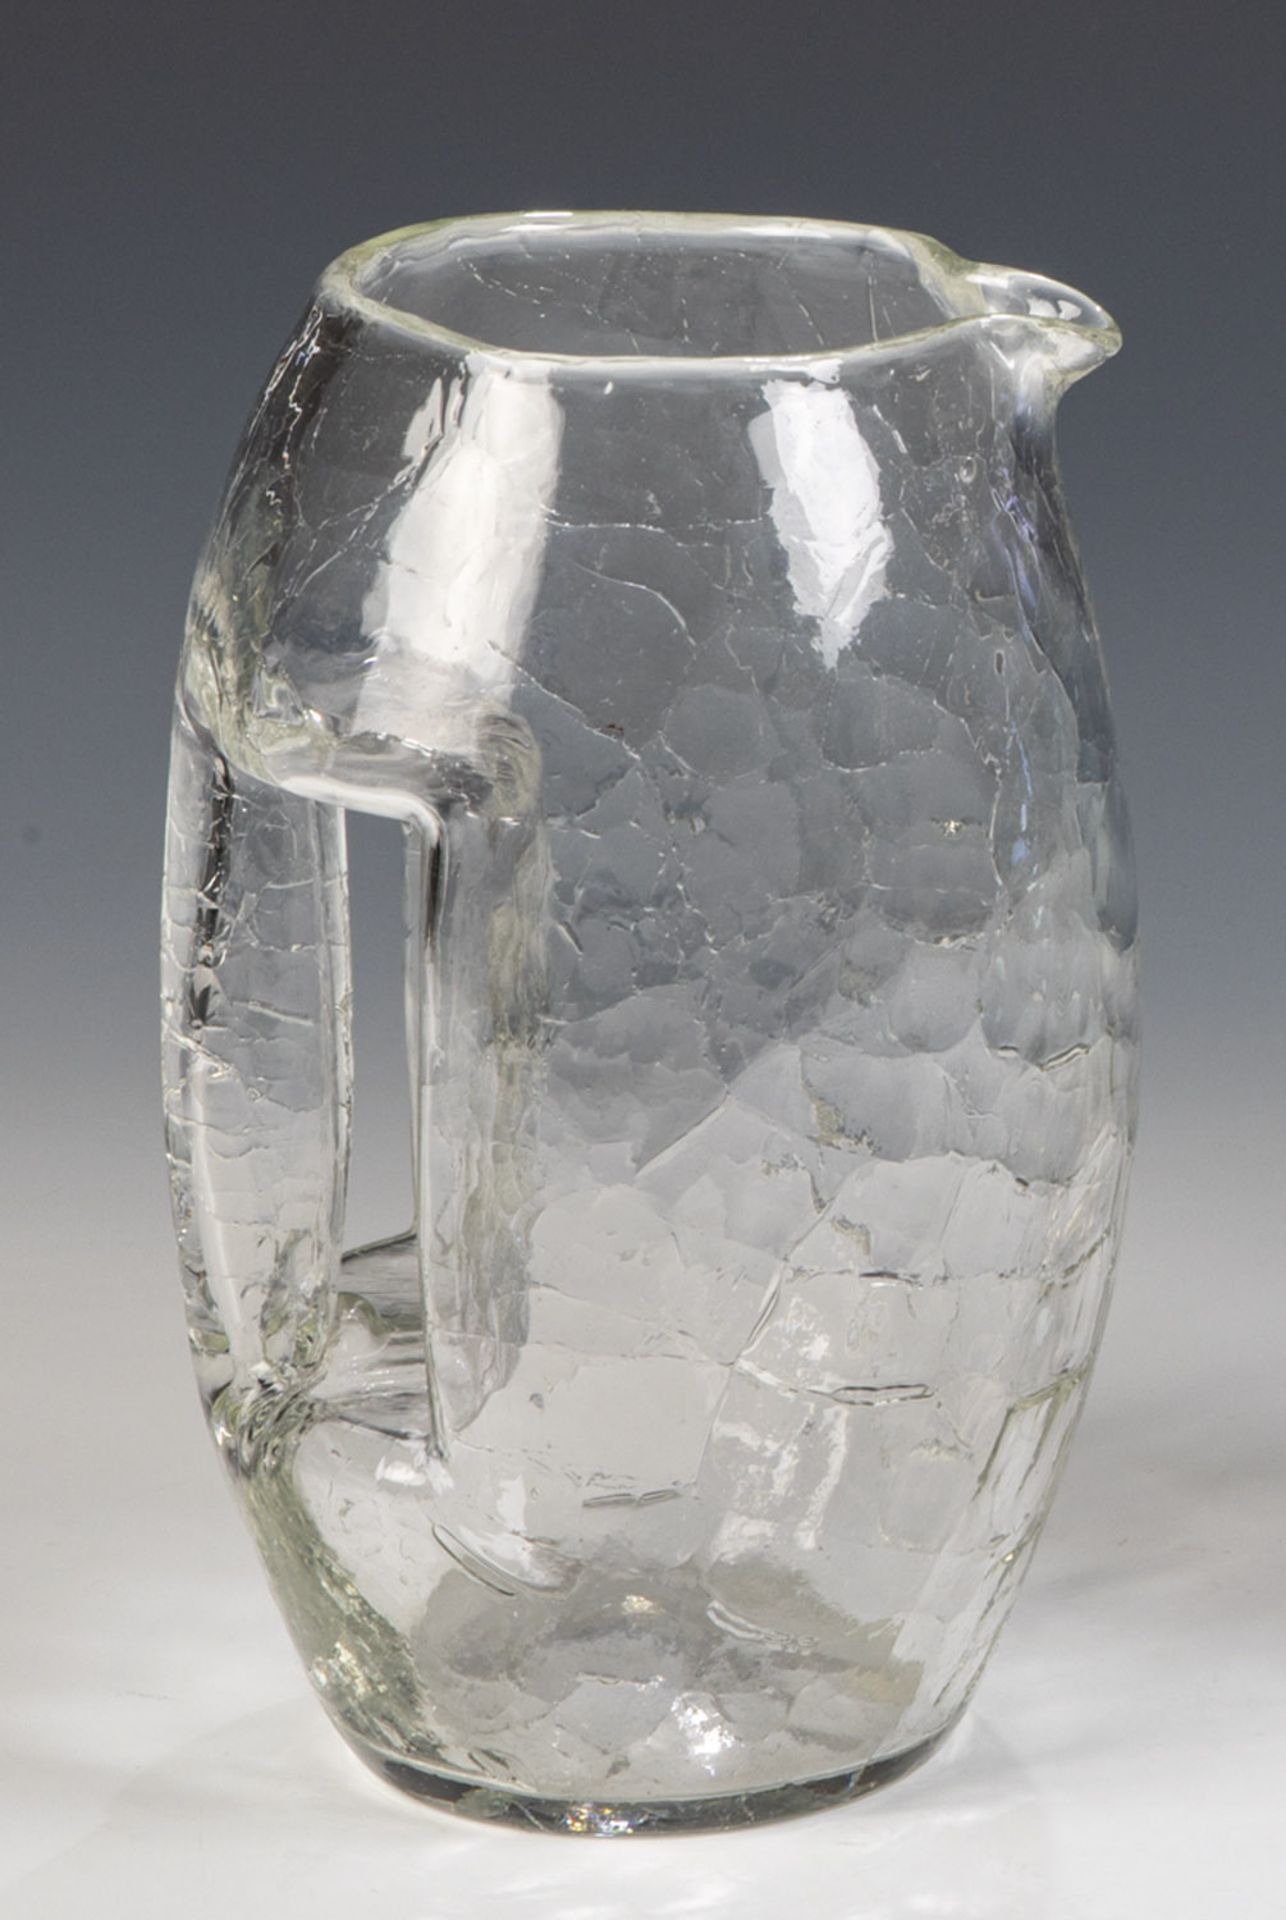 KrugLoetz Wwe., Klostermühle, um 1890-1909 Farbloses Krakeleeglas, formgeblasen. H. 22 cm Lit.: Lötz